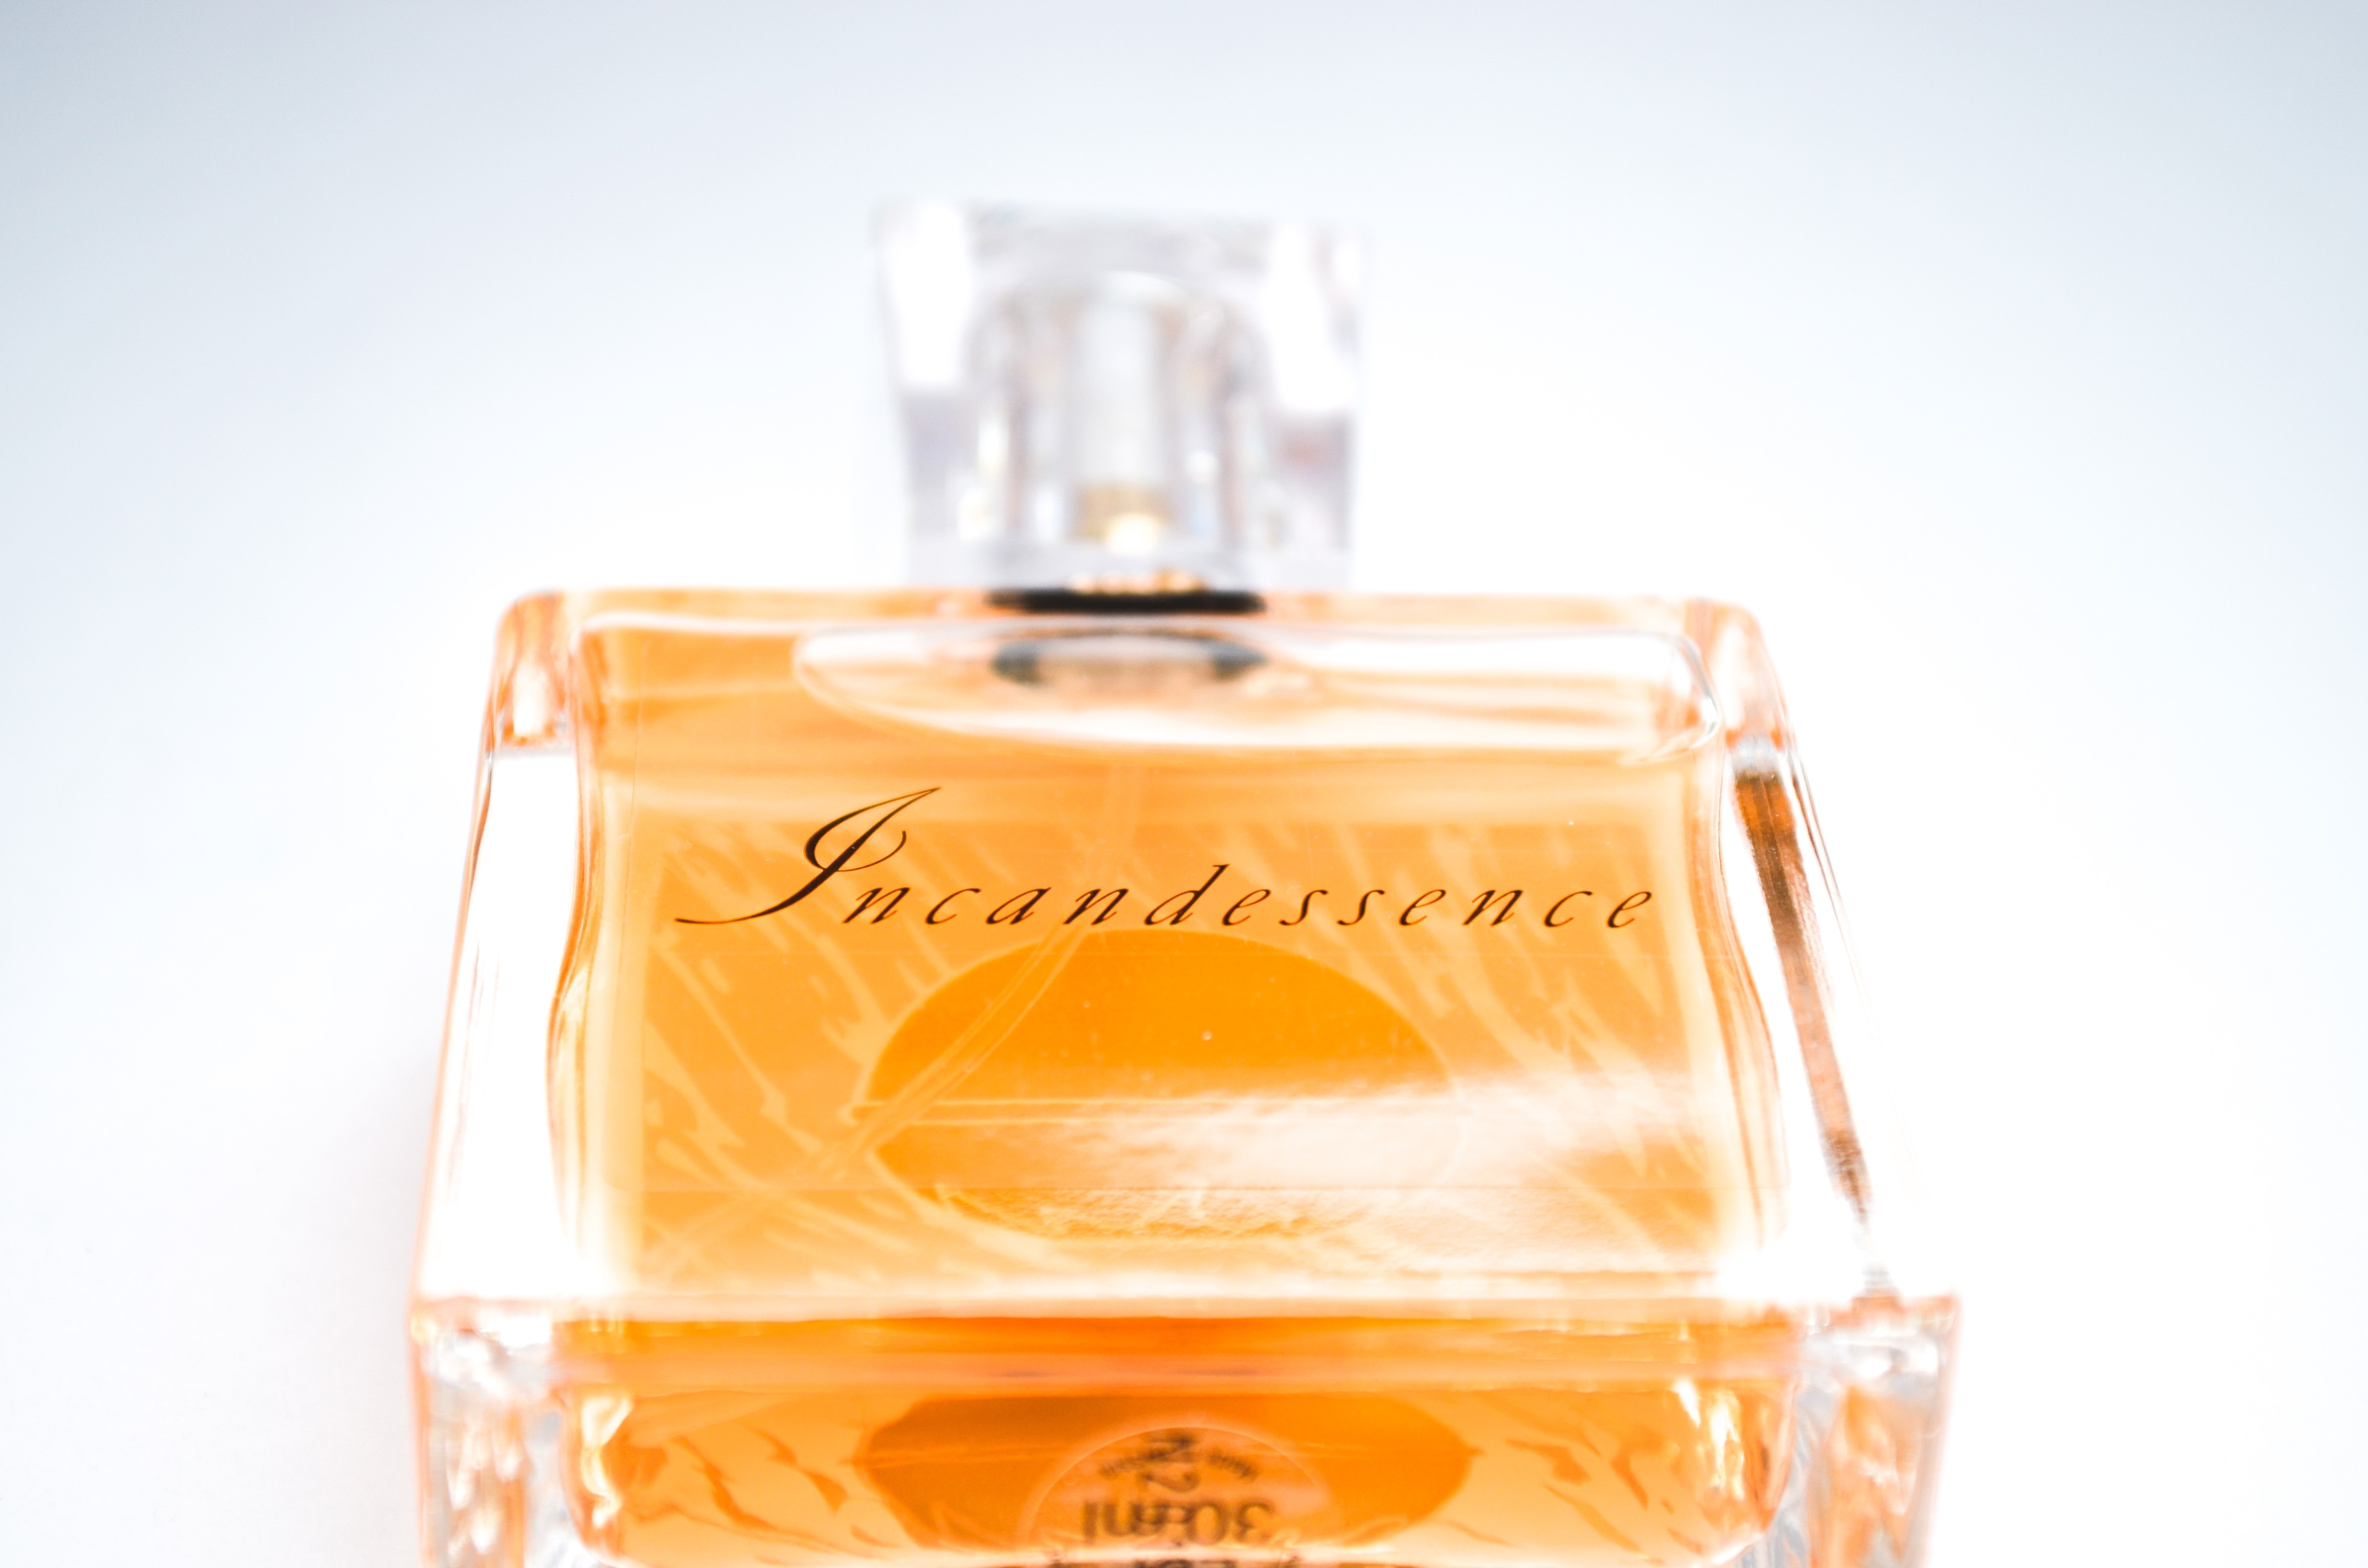 Incandessence perfume bottle with white background